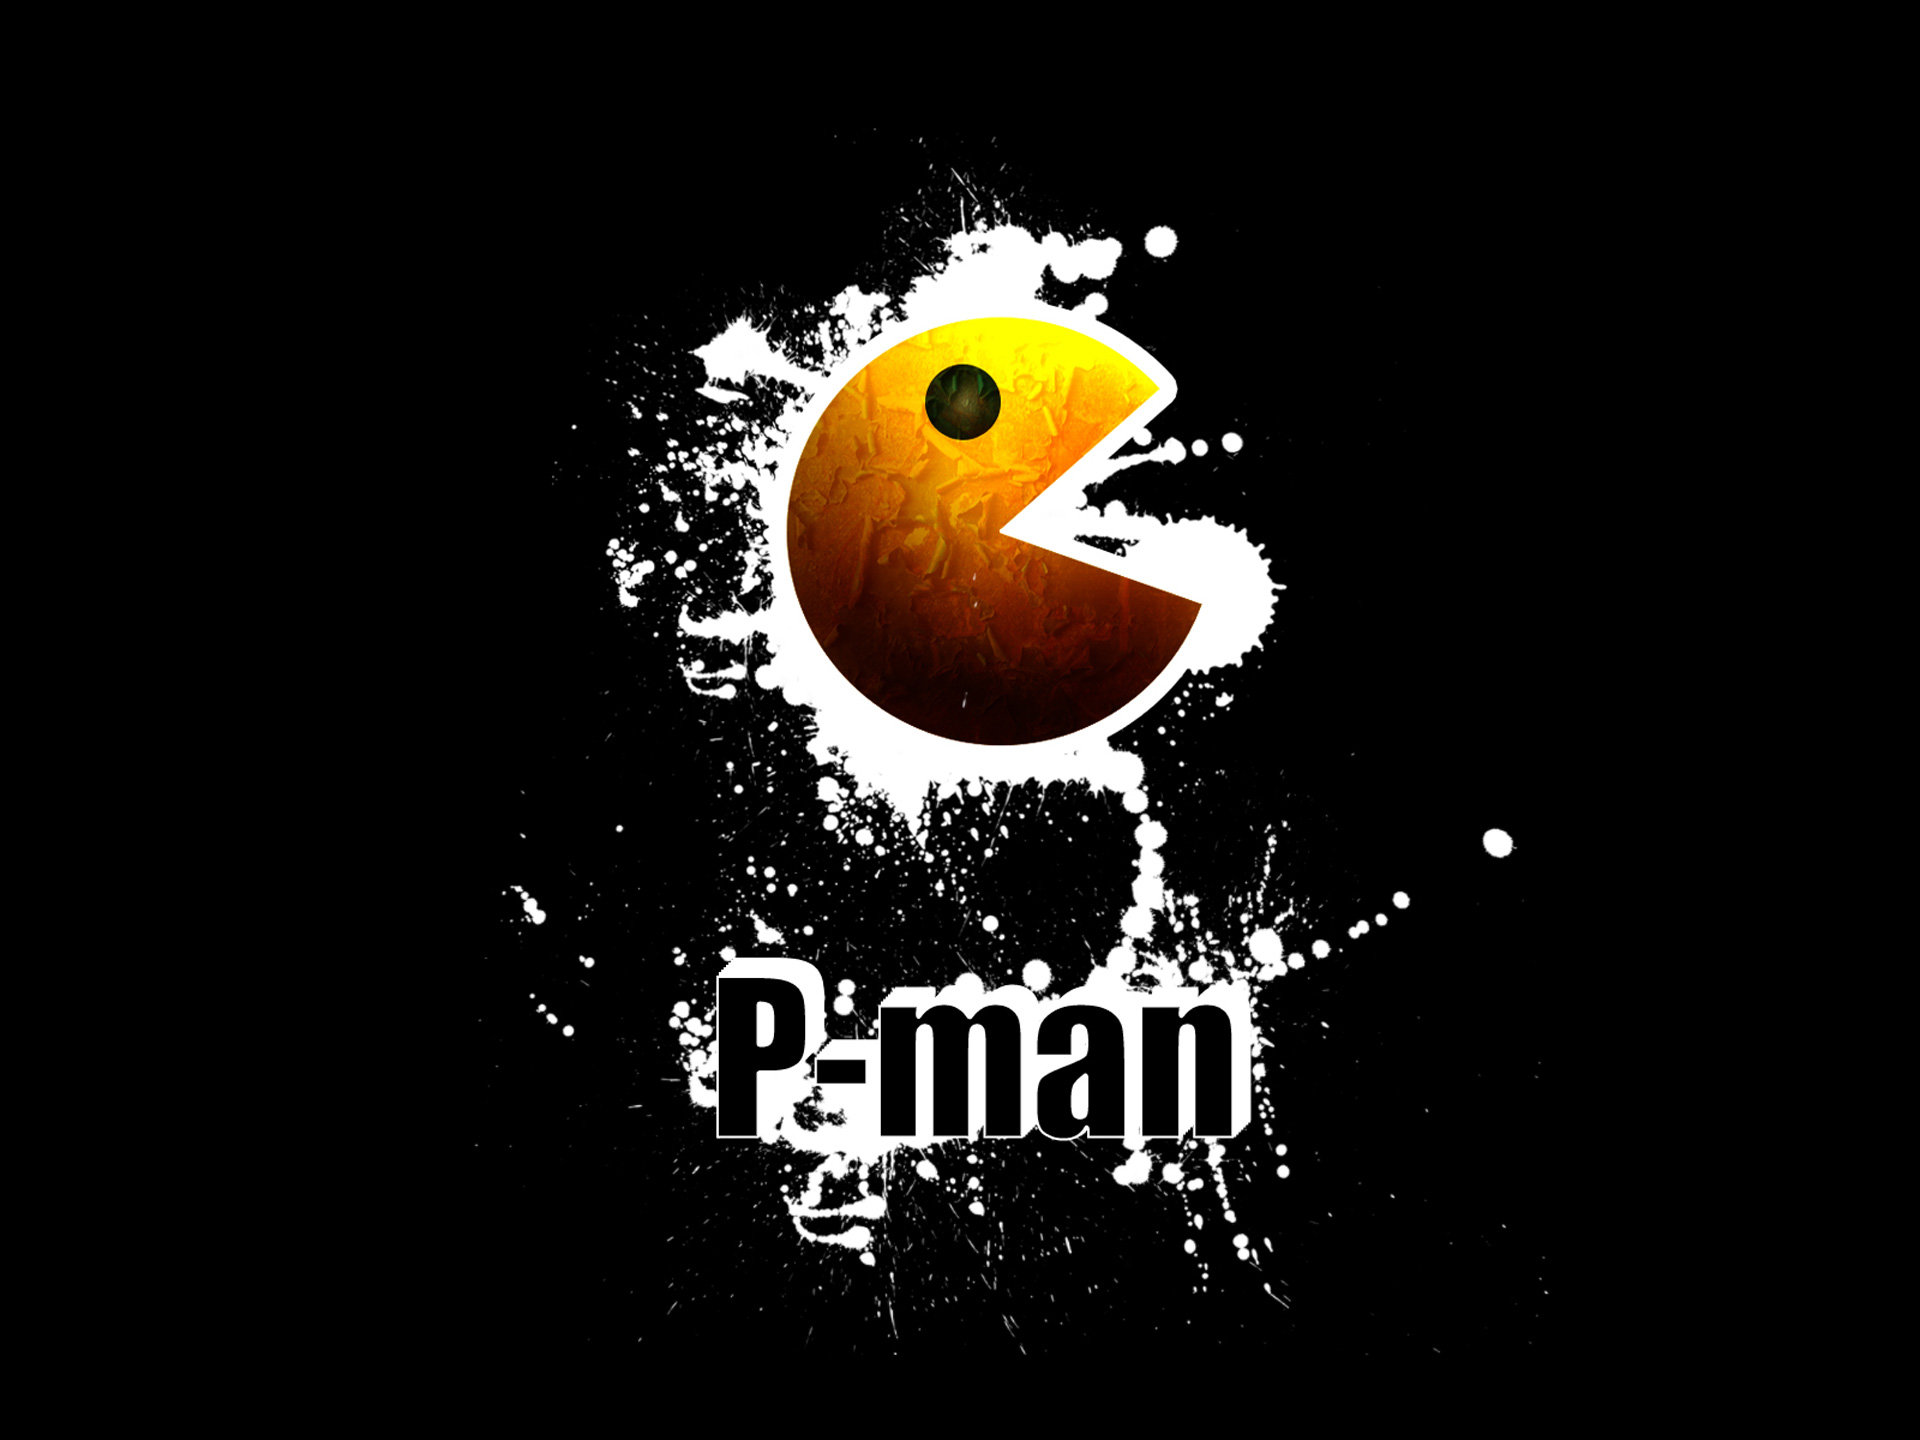 Pac-Man Wallpapers